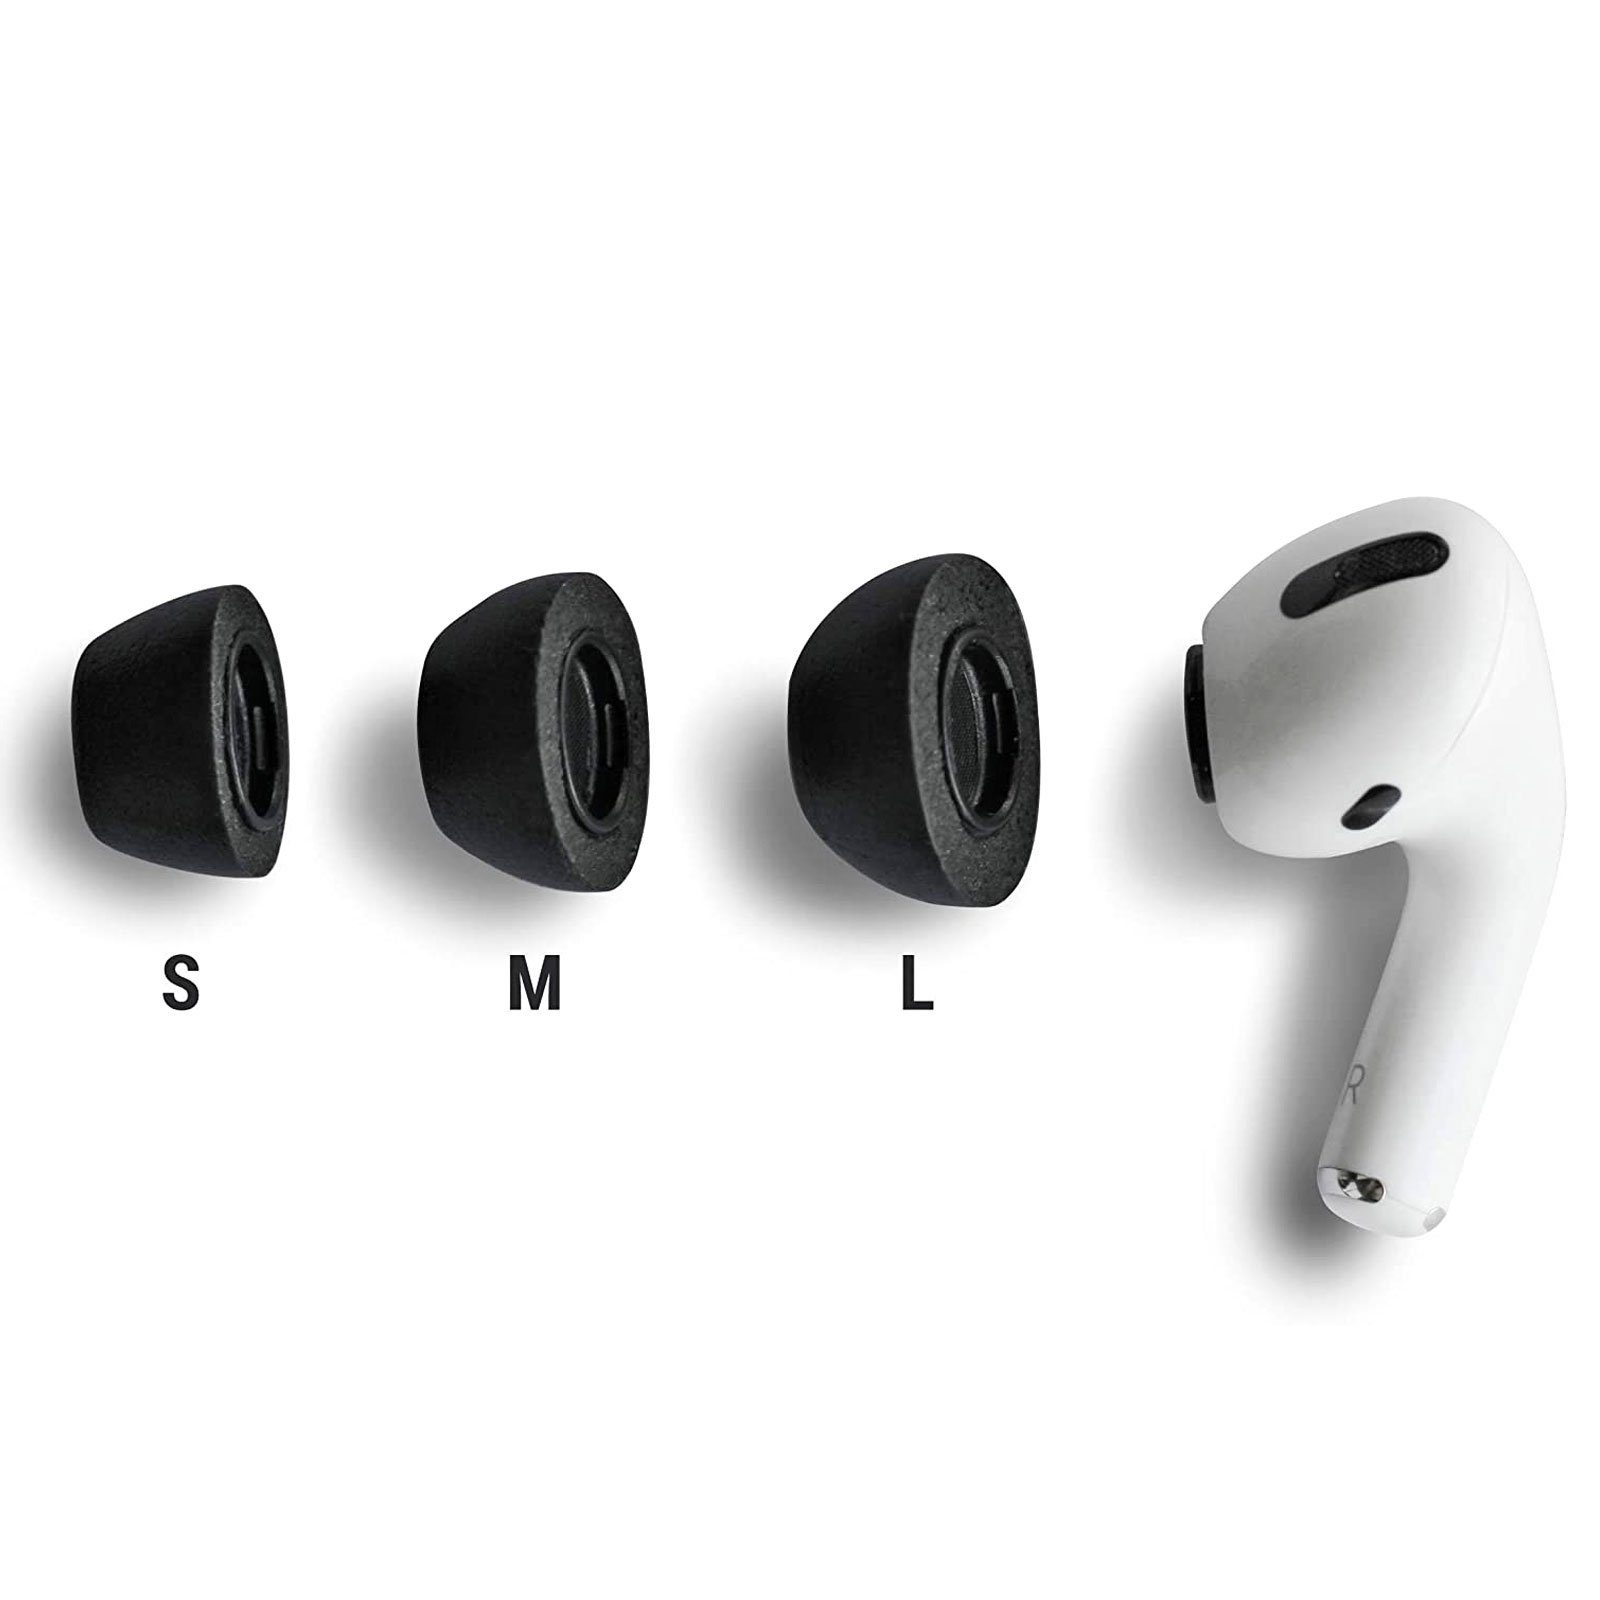 für Ohrstöpsel Lila AirPods Sitz, Hoher Pro 2.0 Tragekomfort) Comply Sicherer L, In-Ear-Kopfhörer (Größe